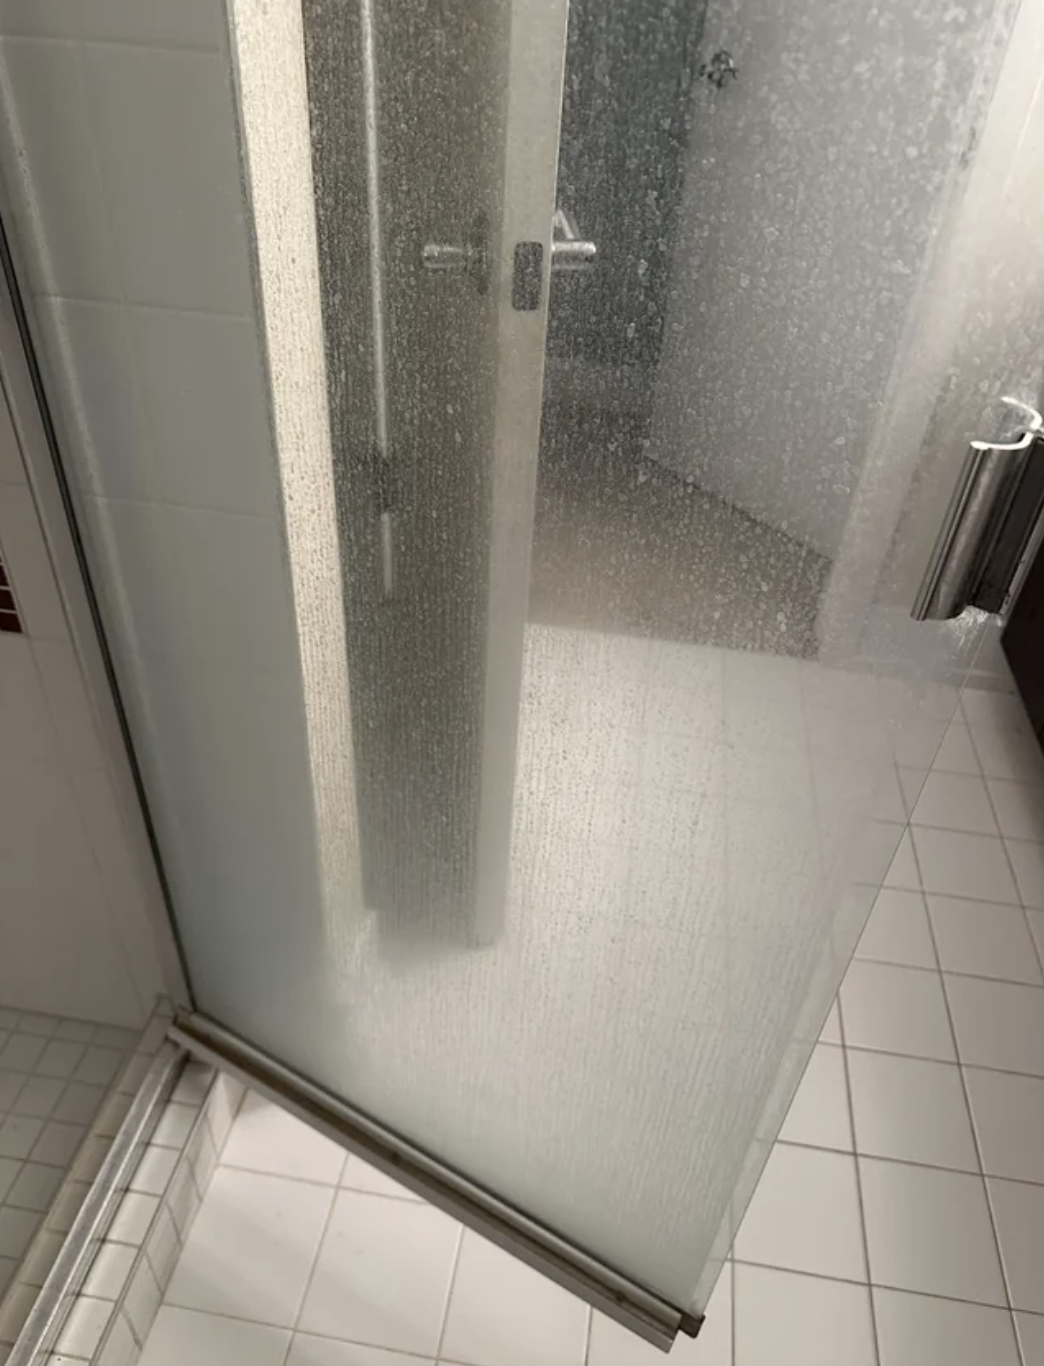 Glass shower door half open showing a tiled shower interior